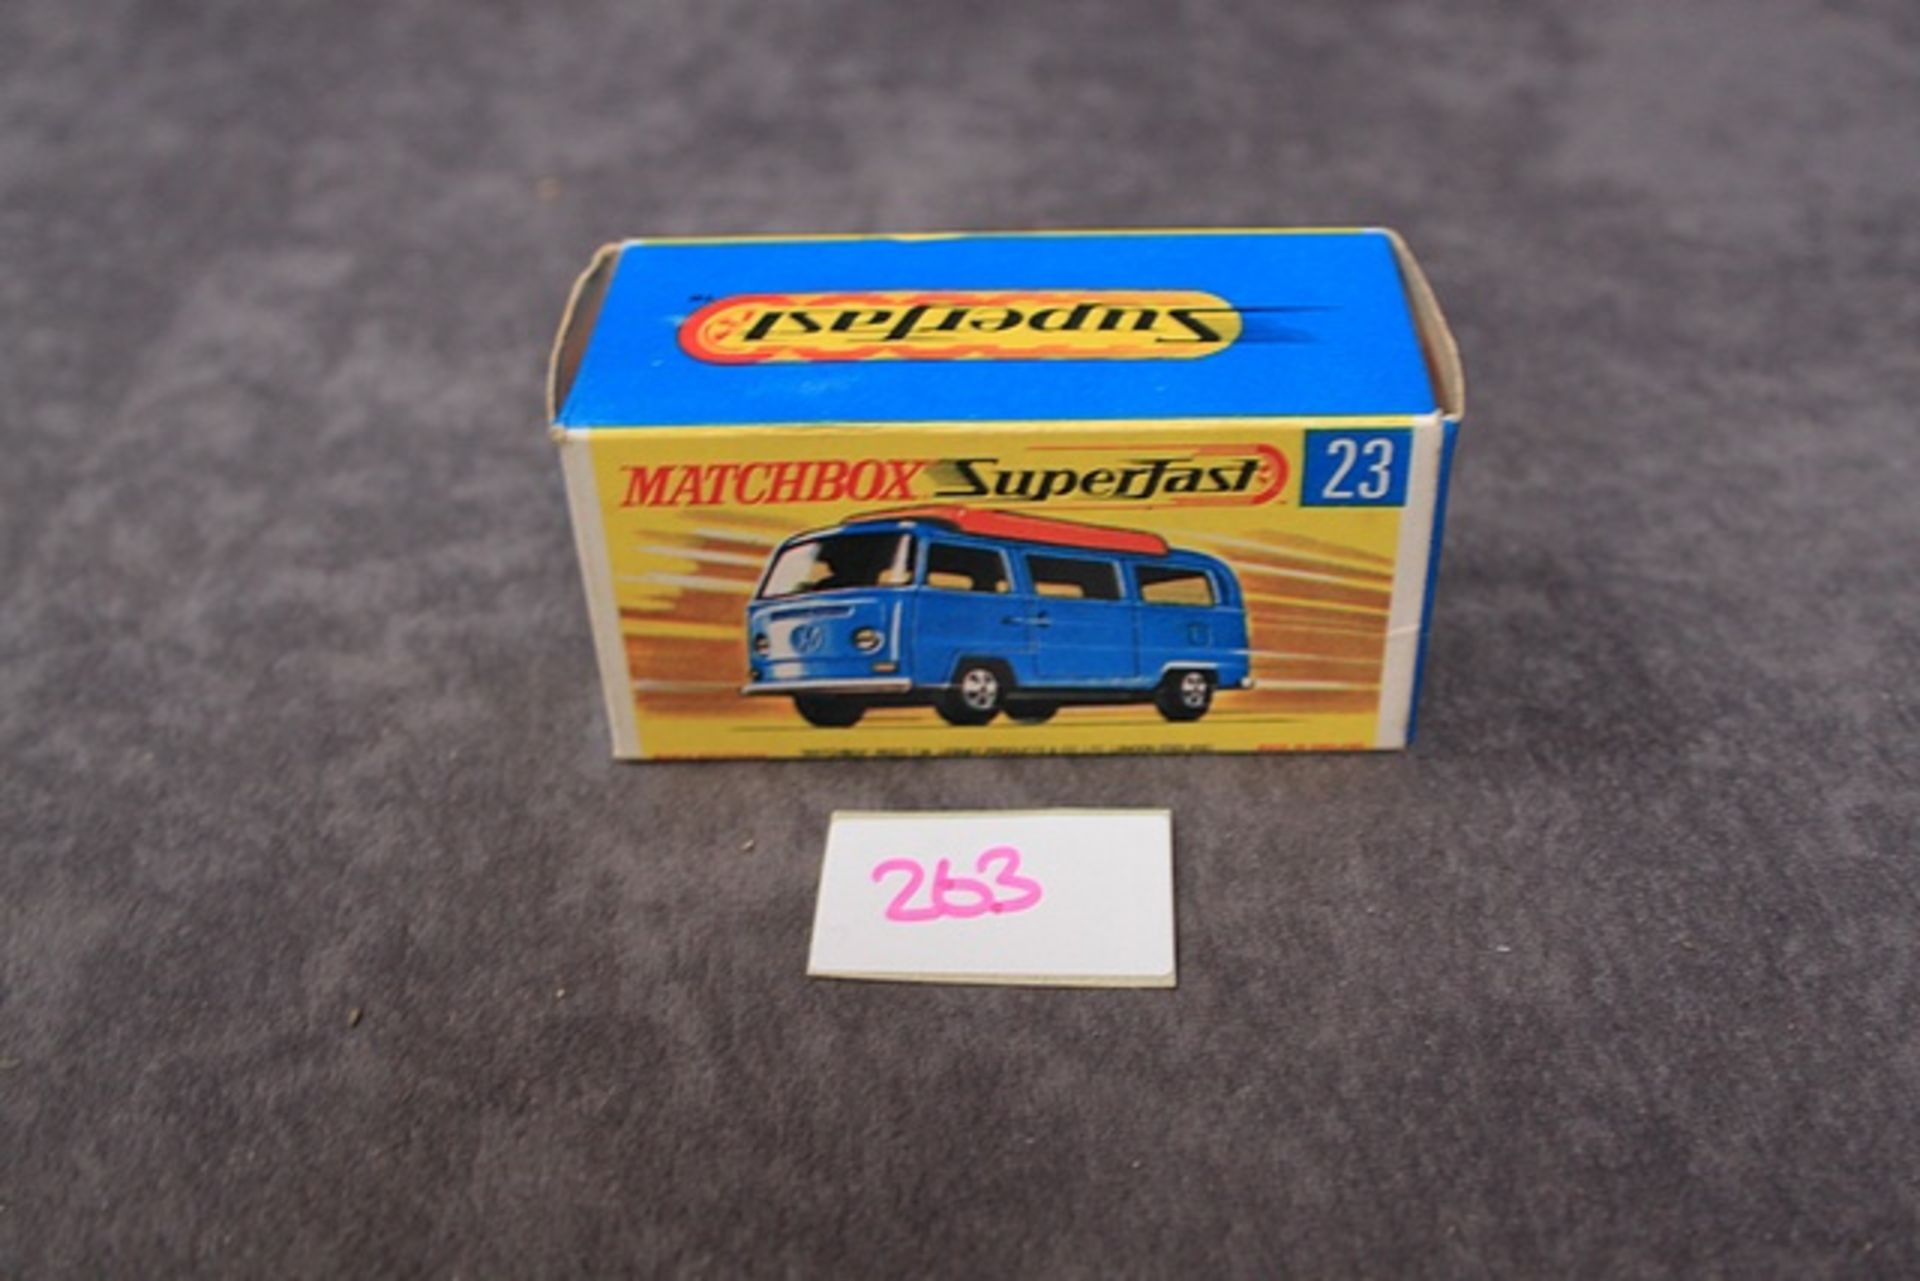 RARE Mint Matchbox Superfast Diecast # 23 Volkswagen Camper In Blue With Orange Interior With Filler - Image 3 of 3